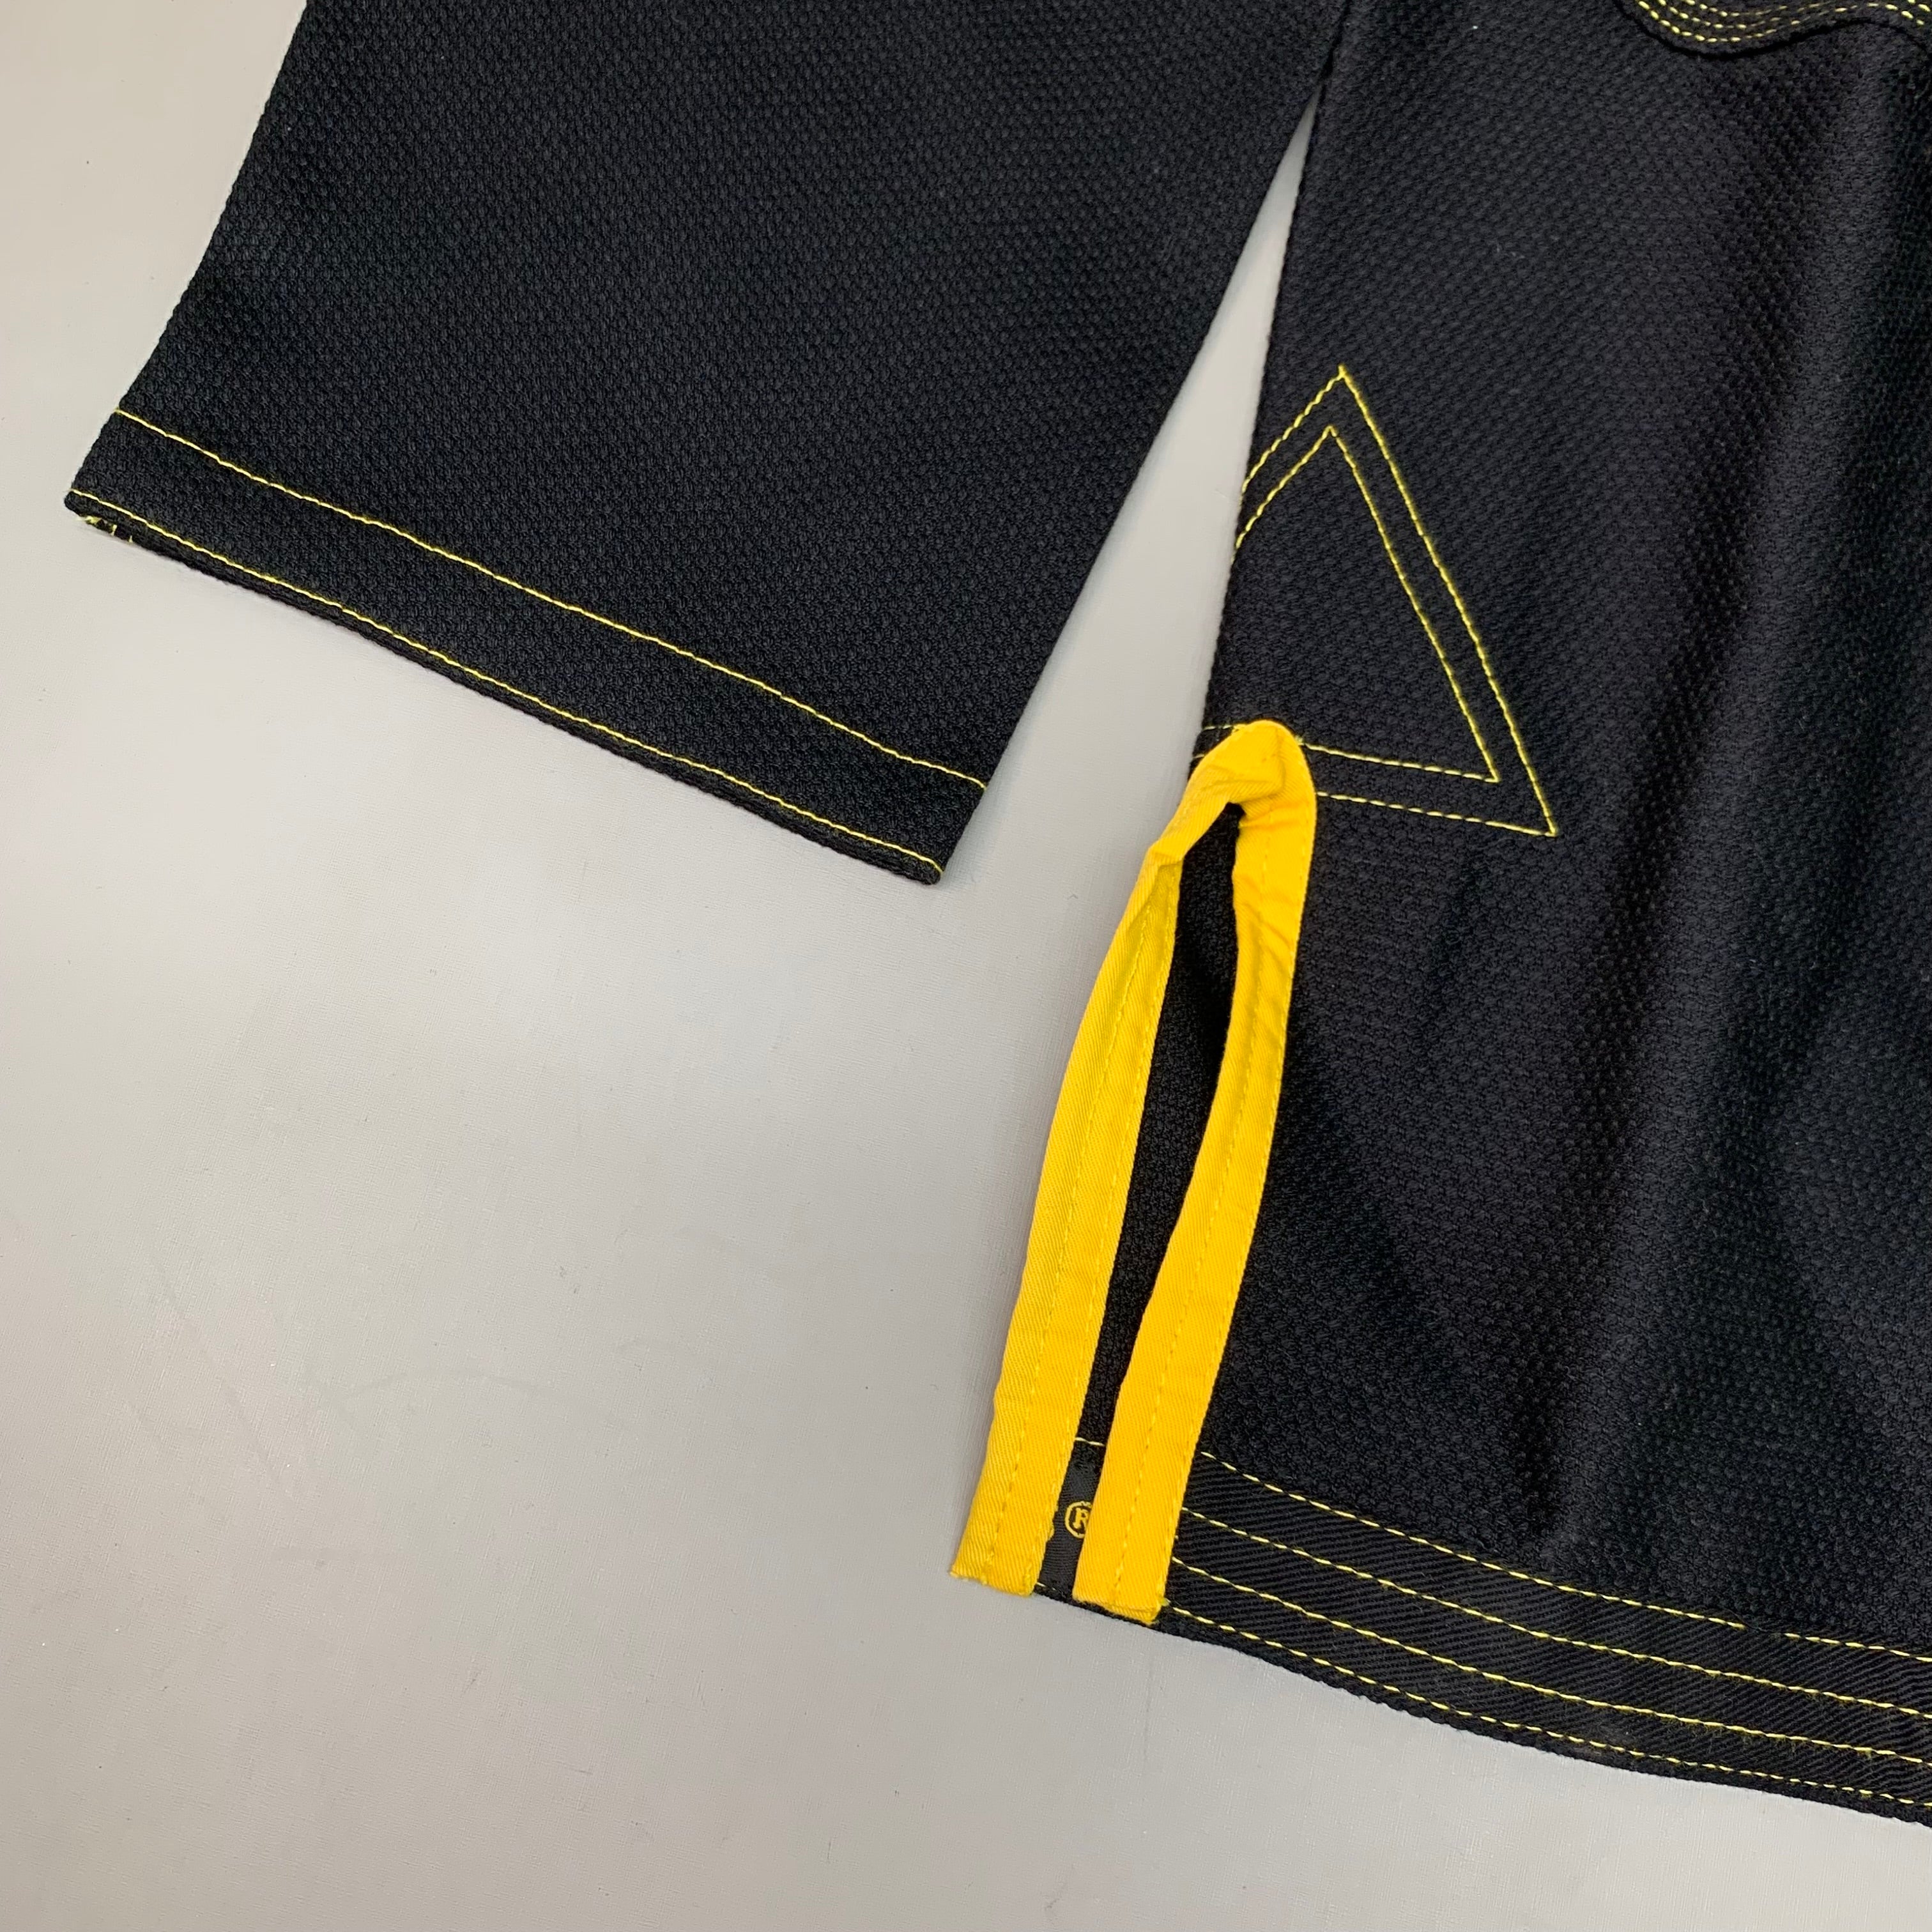 BTLGRNDS Martial Arts Jiu Jitsu Gi Uniform Adult Size Black/Yellow